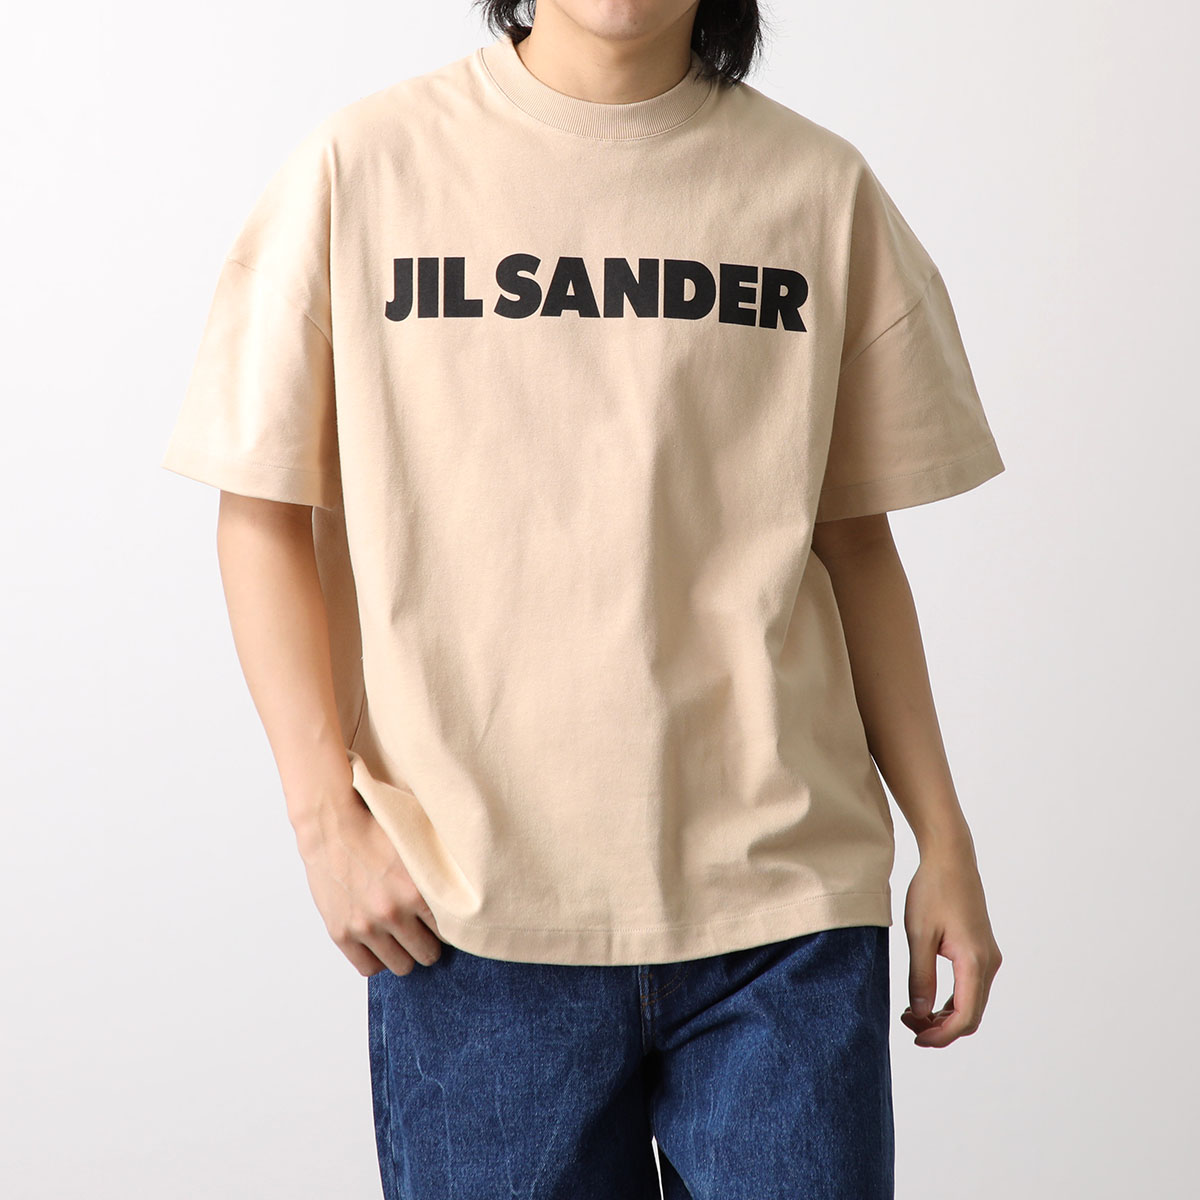 JIL SANDER ジルサンダー Tシャツ J21GC0001 J20215 メンズ 半袖 カット...